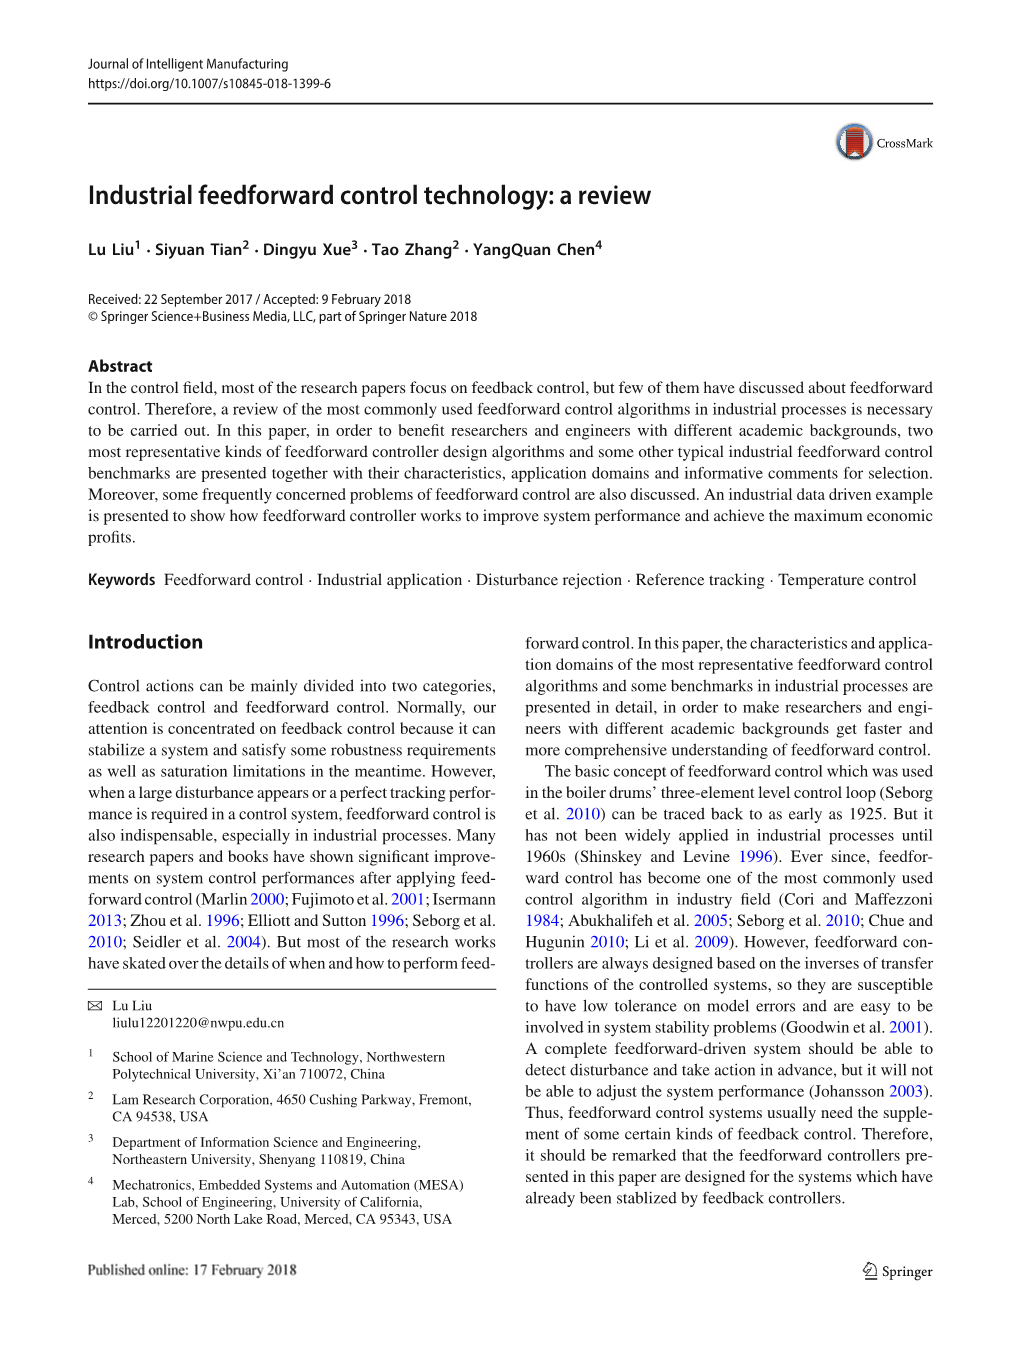 Industrial Feedforward Control Technology: a Review